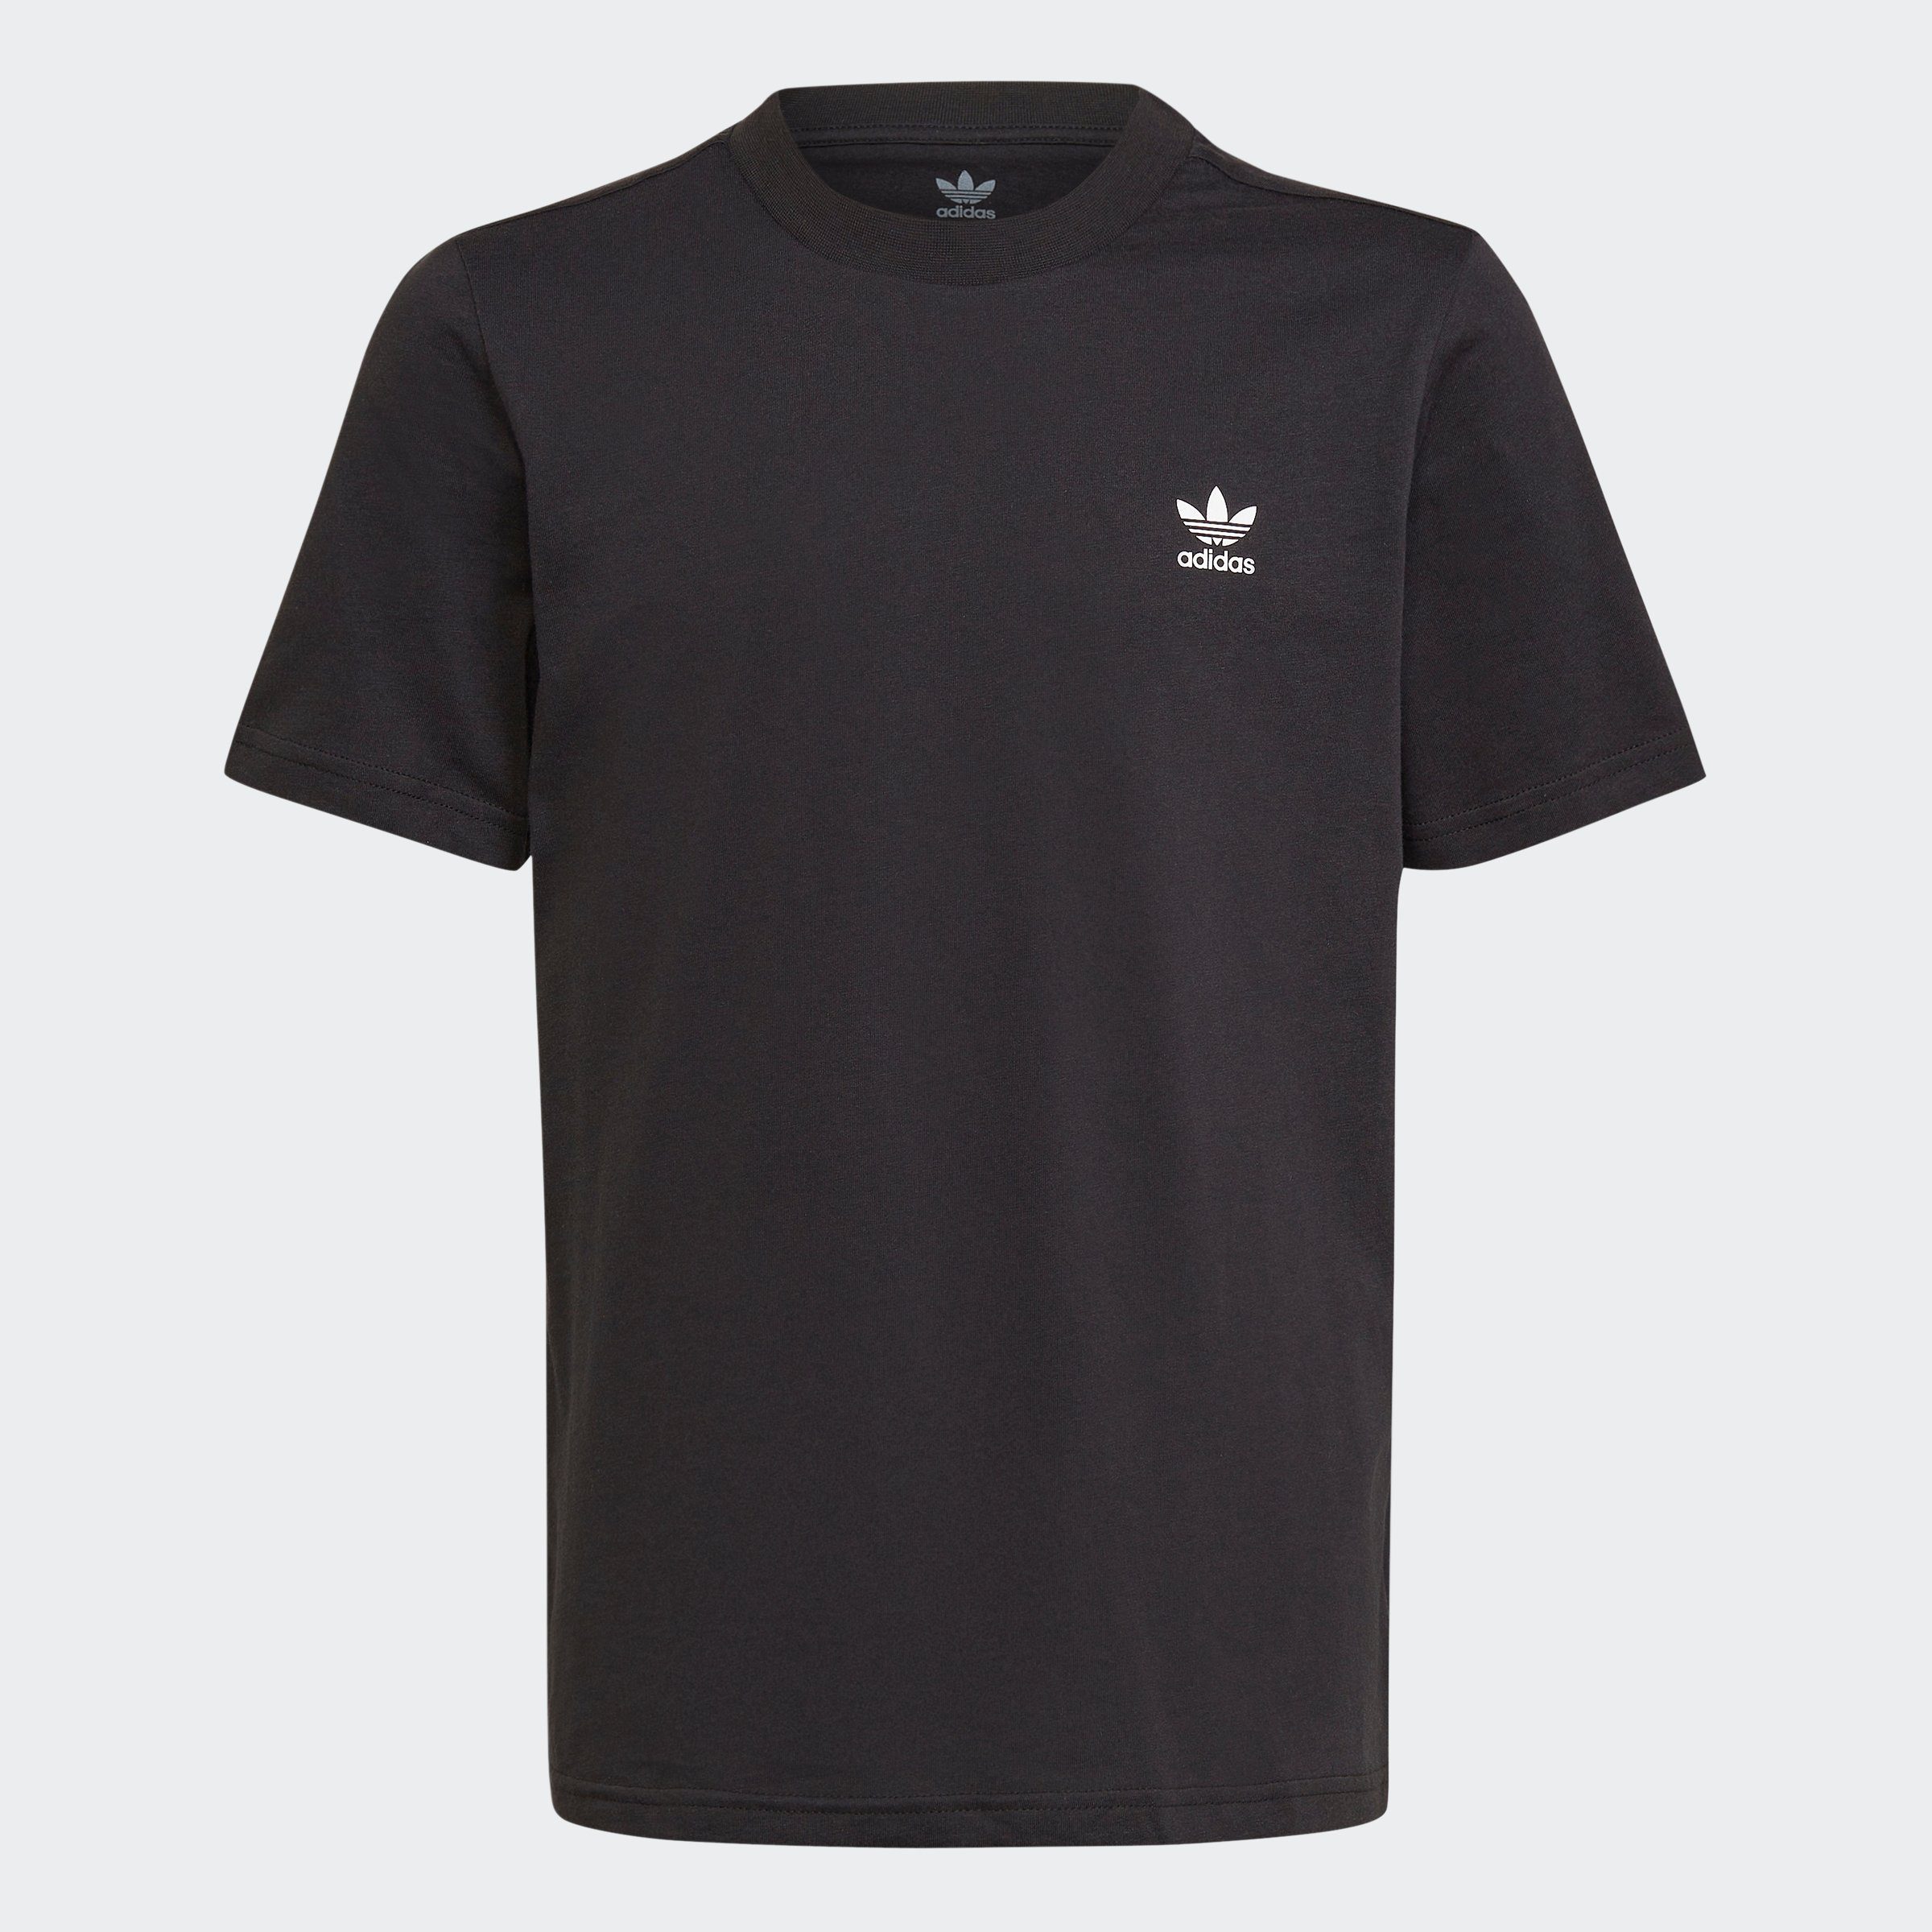 adidas Originals Black TEE T-Shirt